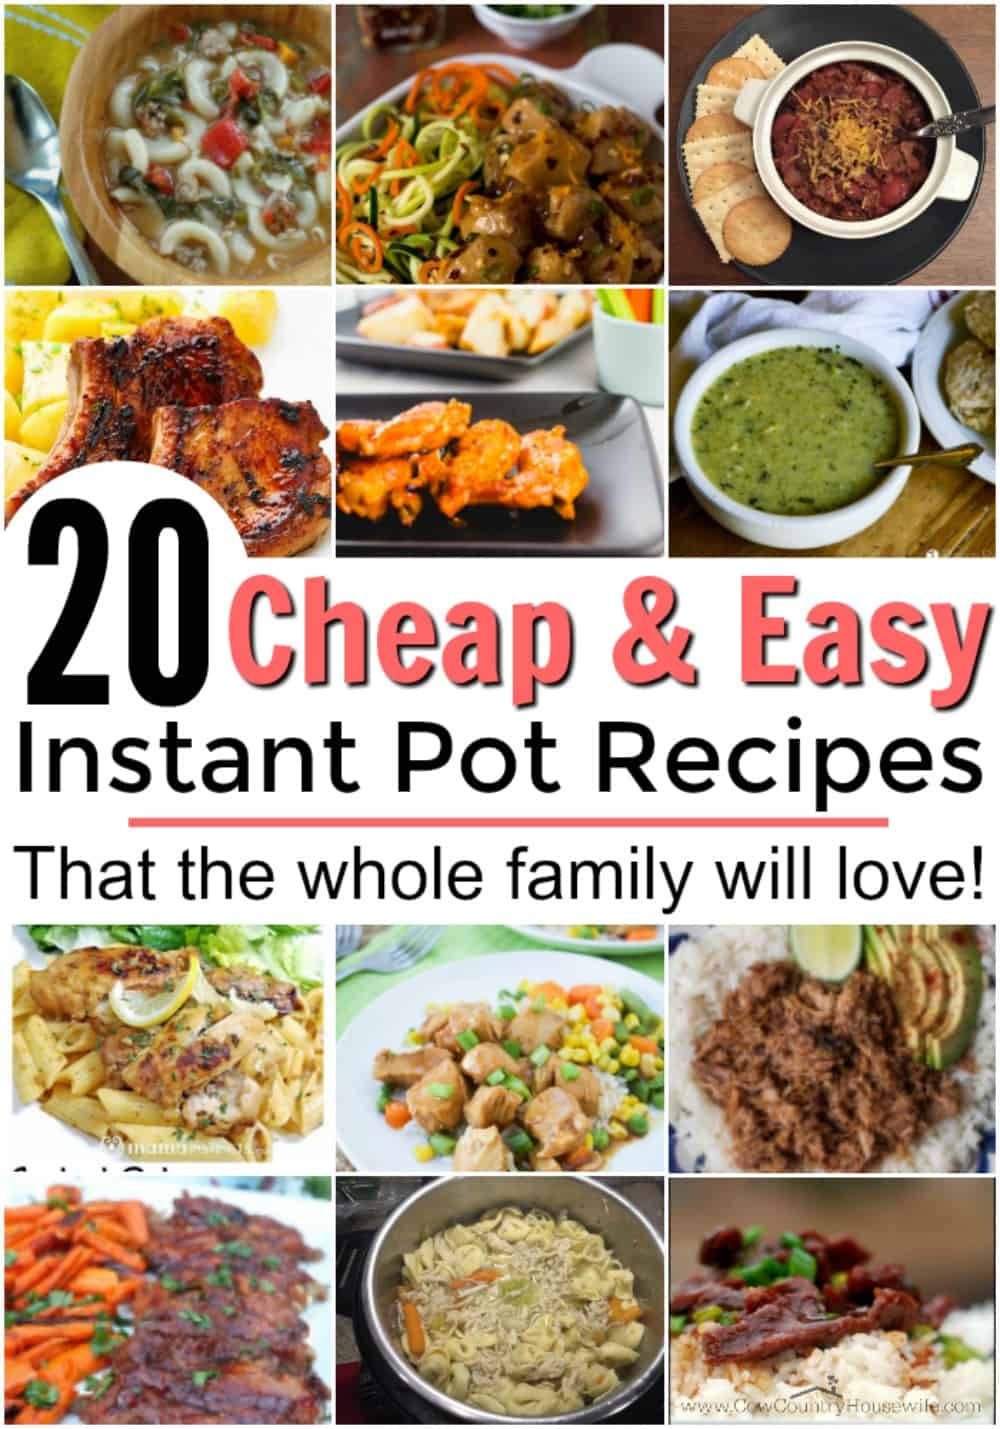 https://www.carolinevencil.com/wp-content/uploads/2017/01/20-Cheap-Easy-Instant-Pot-Recipes.jpg